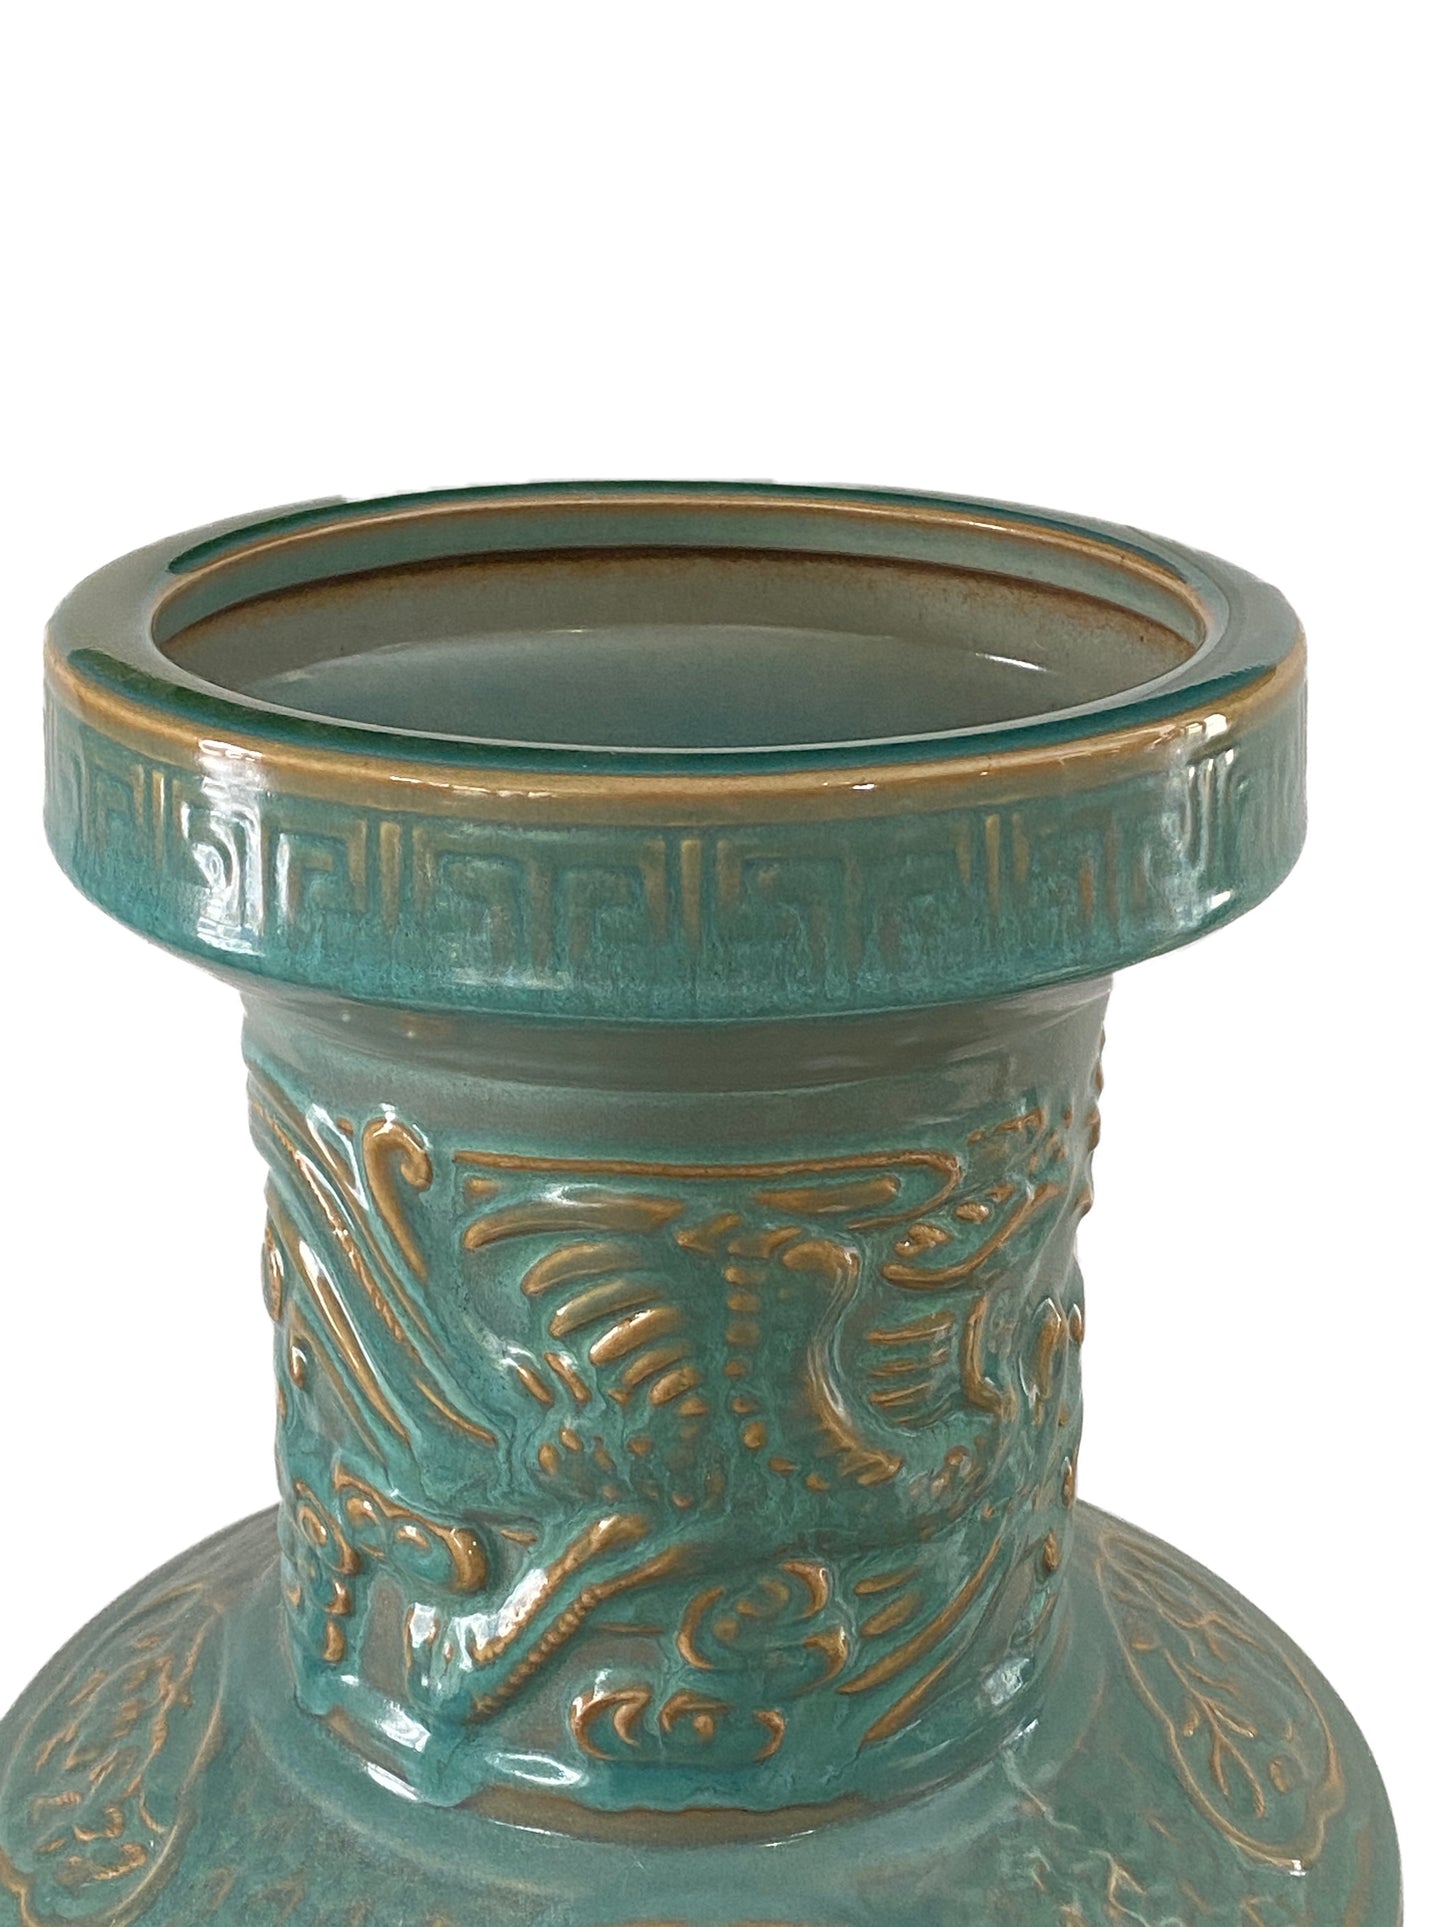 #3375 Chinoiserie Large Porcelain Dragon Vase 26.5" H